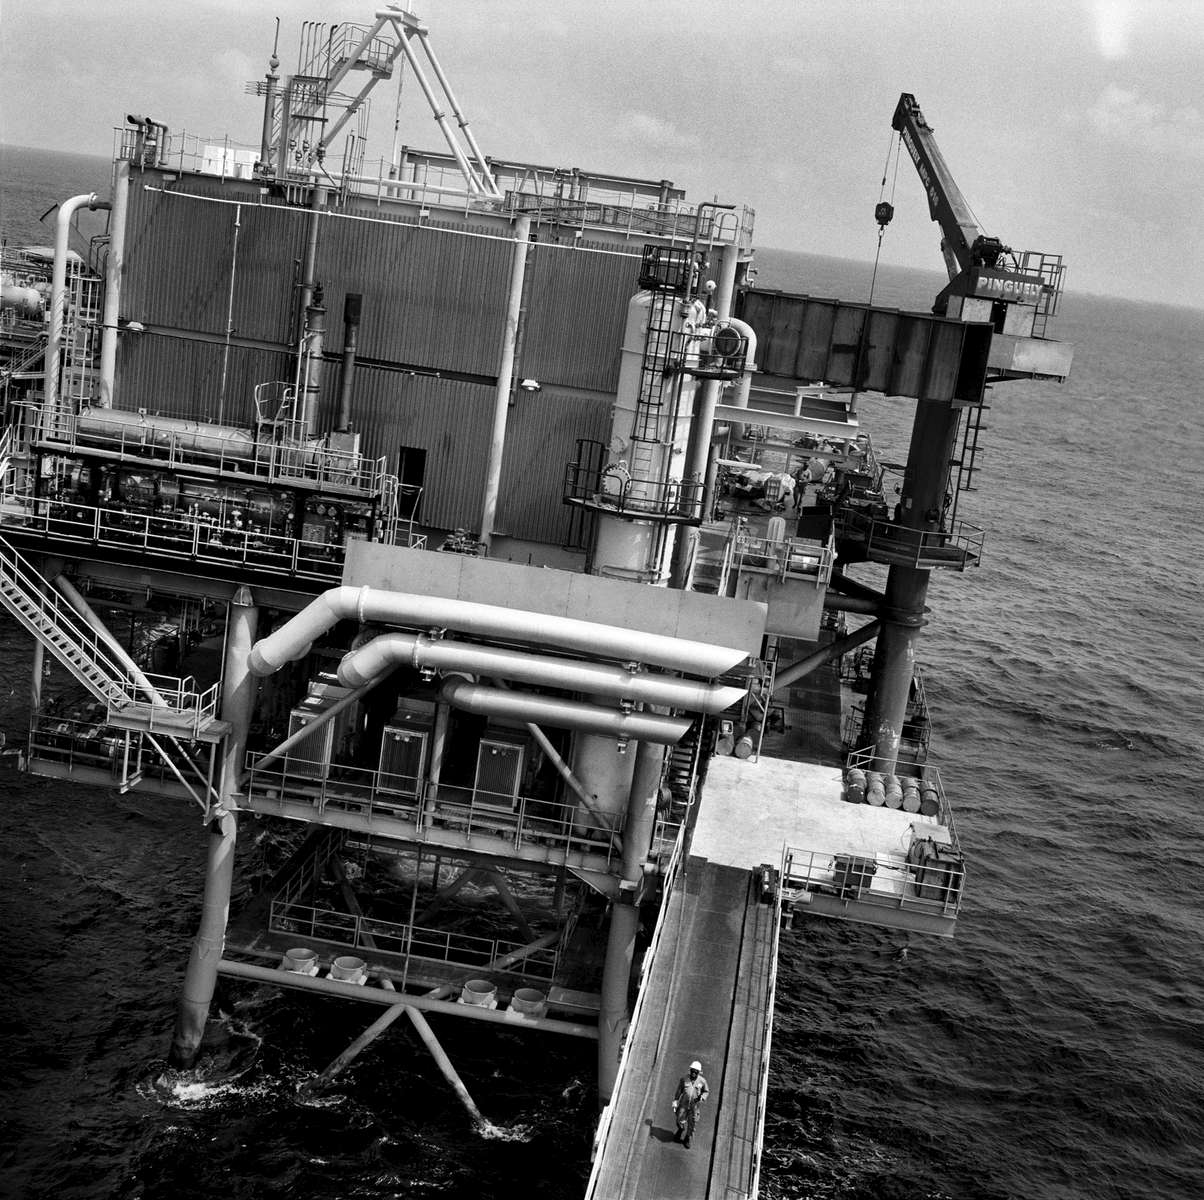 Torpille, ELF petrol platform, off Gabon's equatorial coastline 2002